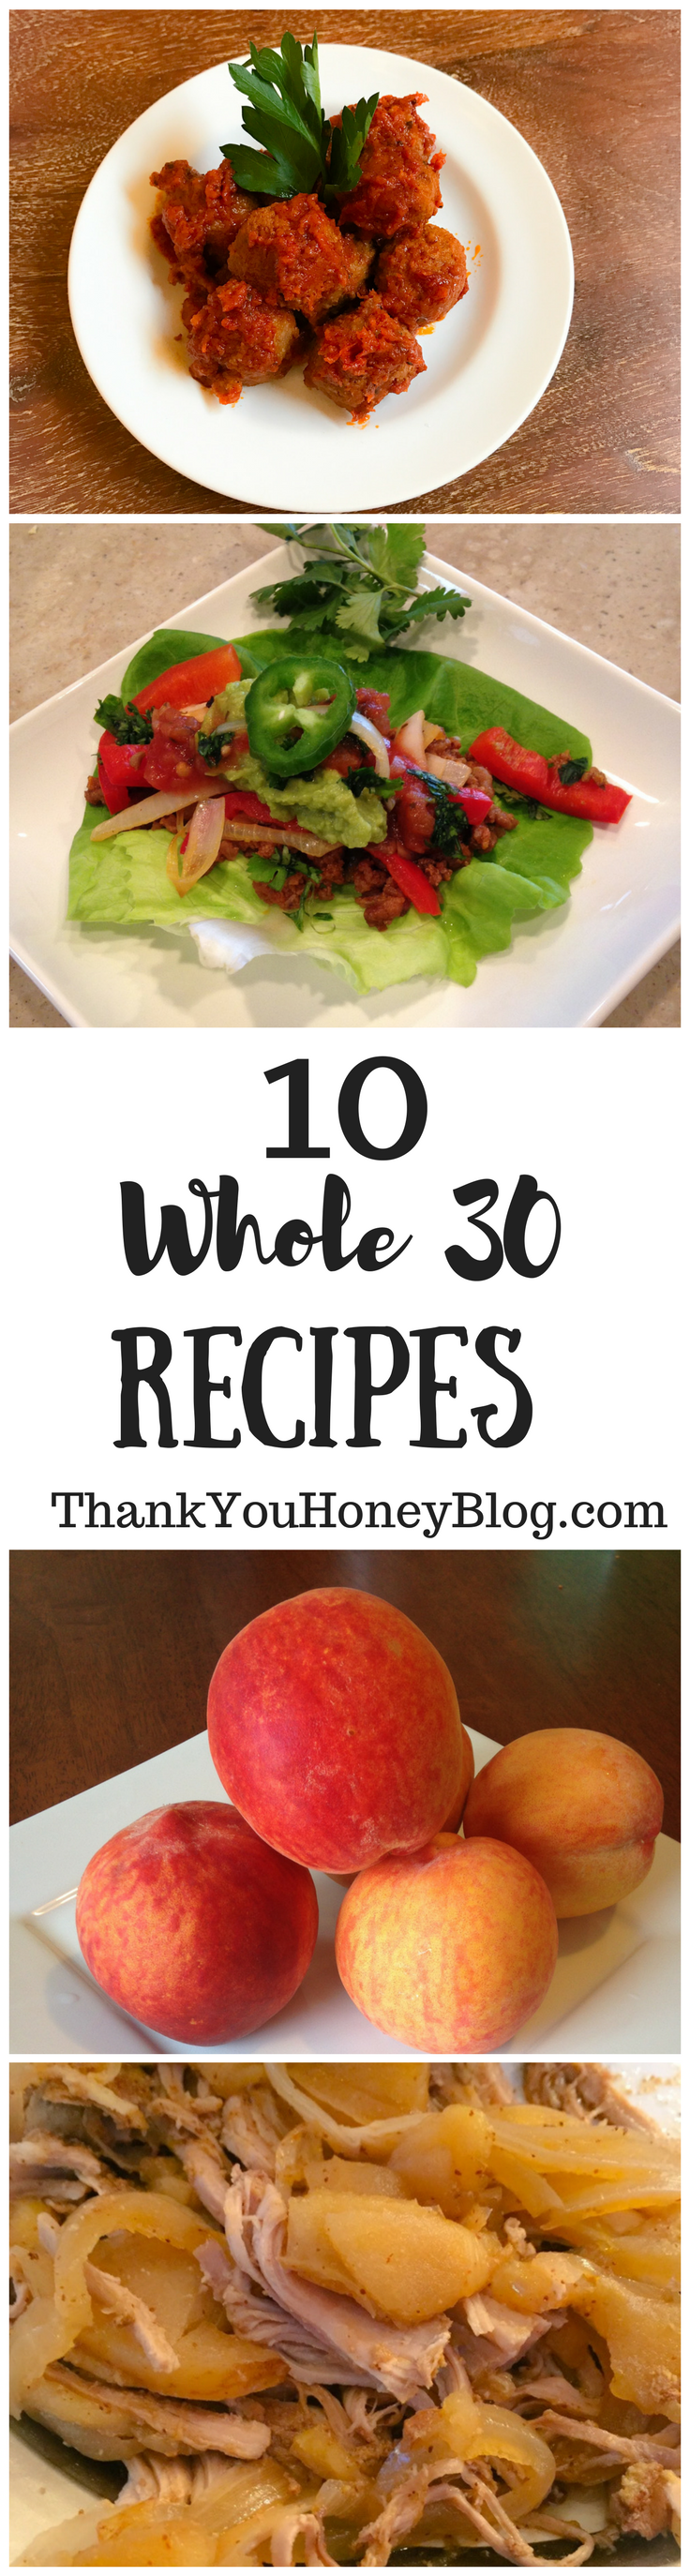 10 Whole 30 Recipes